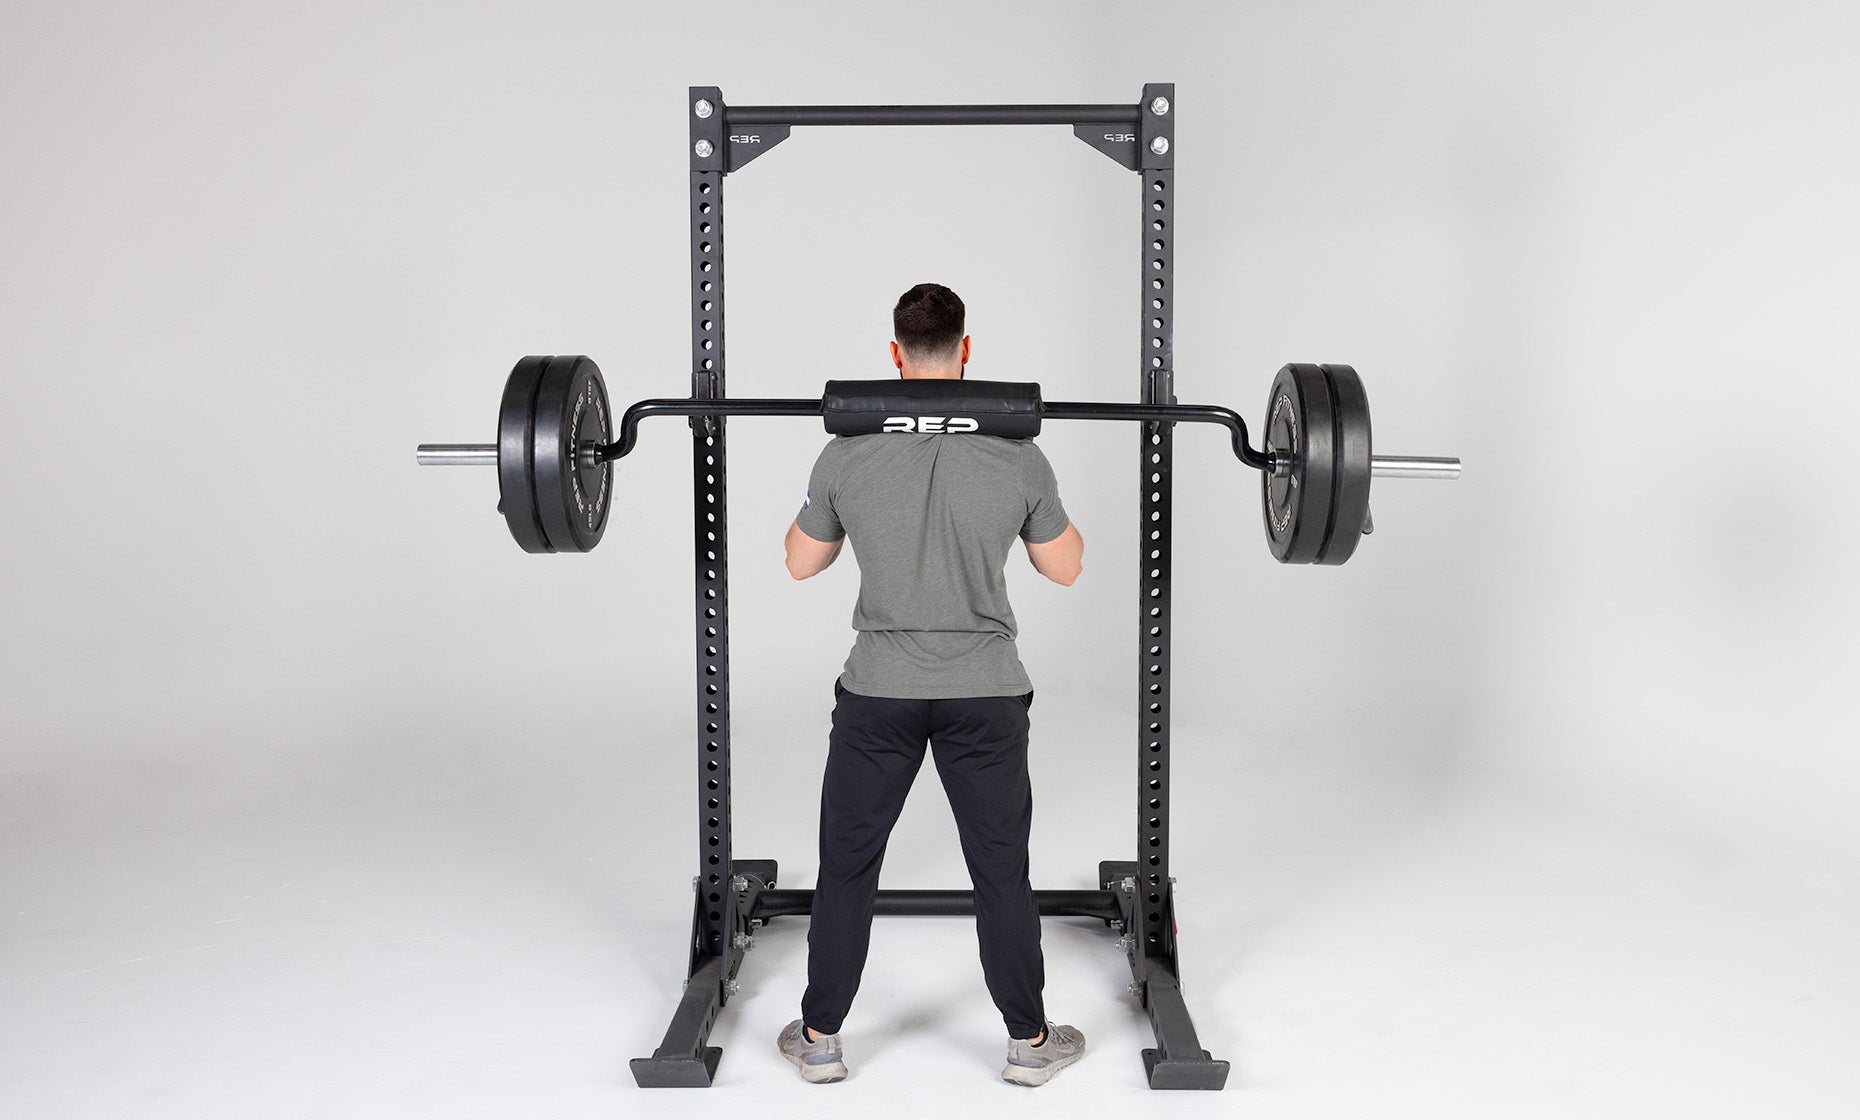 Safety squat bar (SSB) plate position